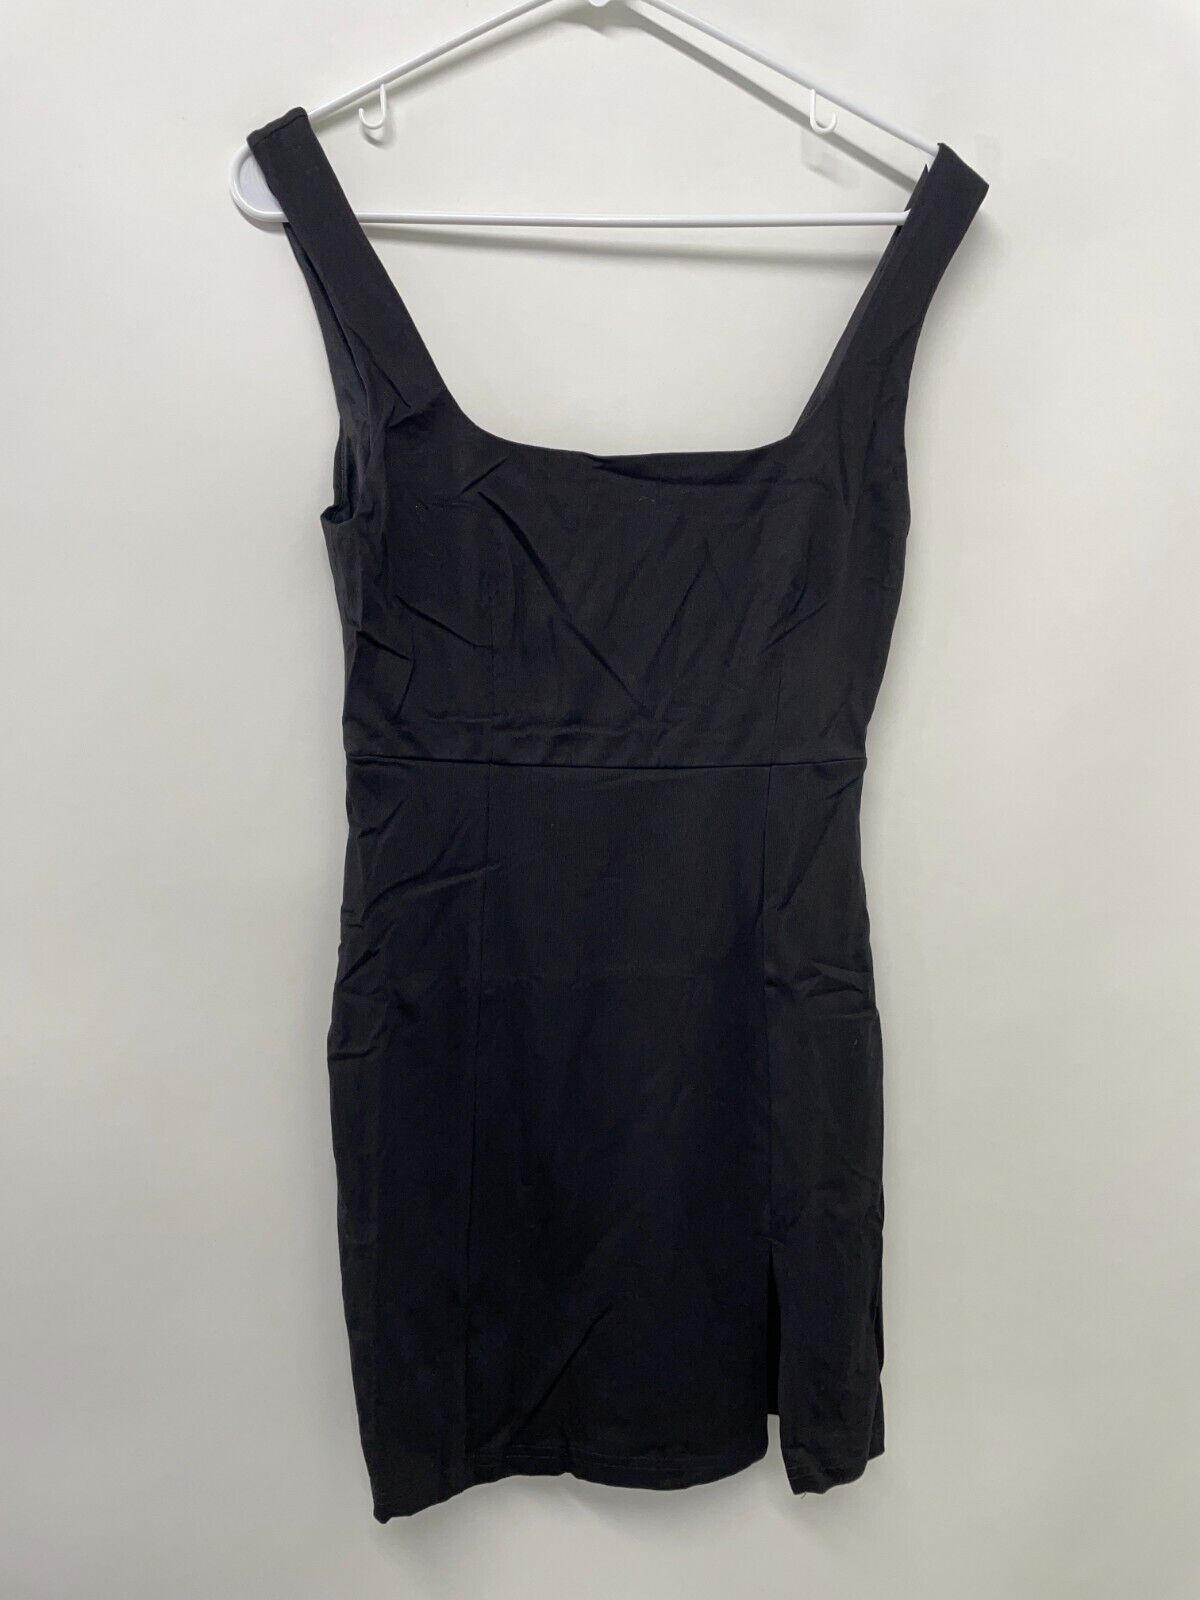 Showpo Women's 6 Hughes Square Neck Mini Dress Black Front Slit SD20010042 NWT